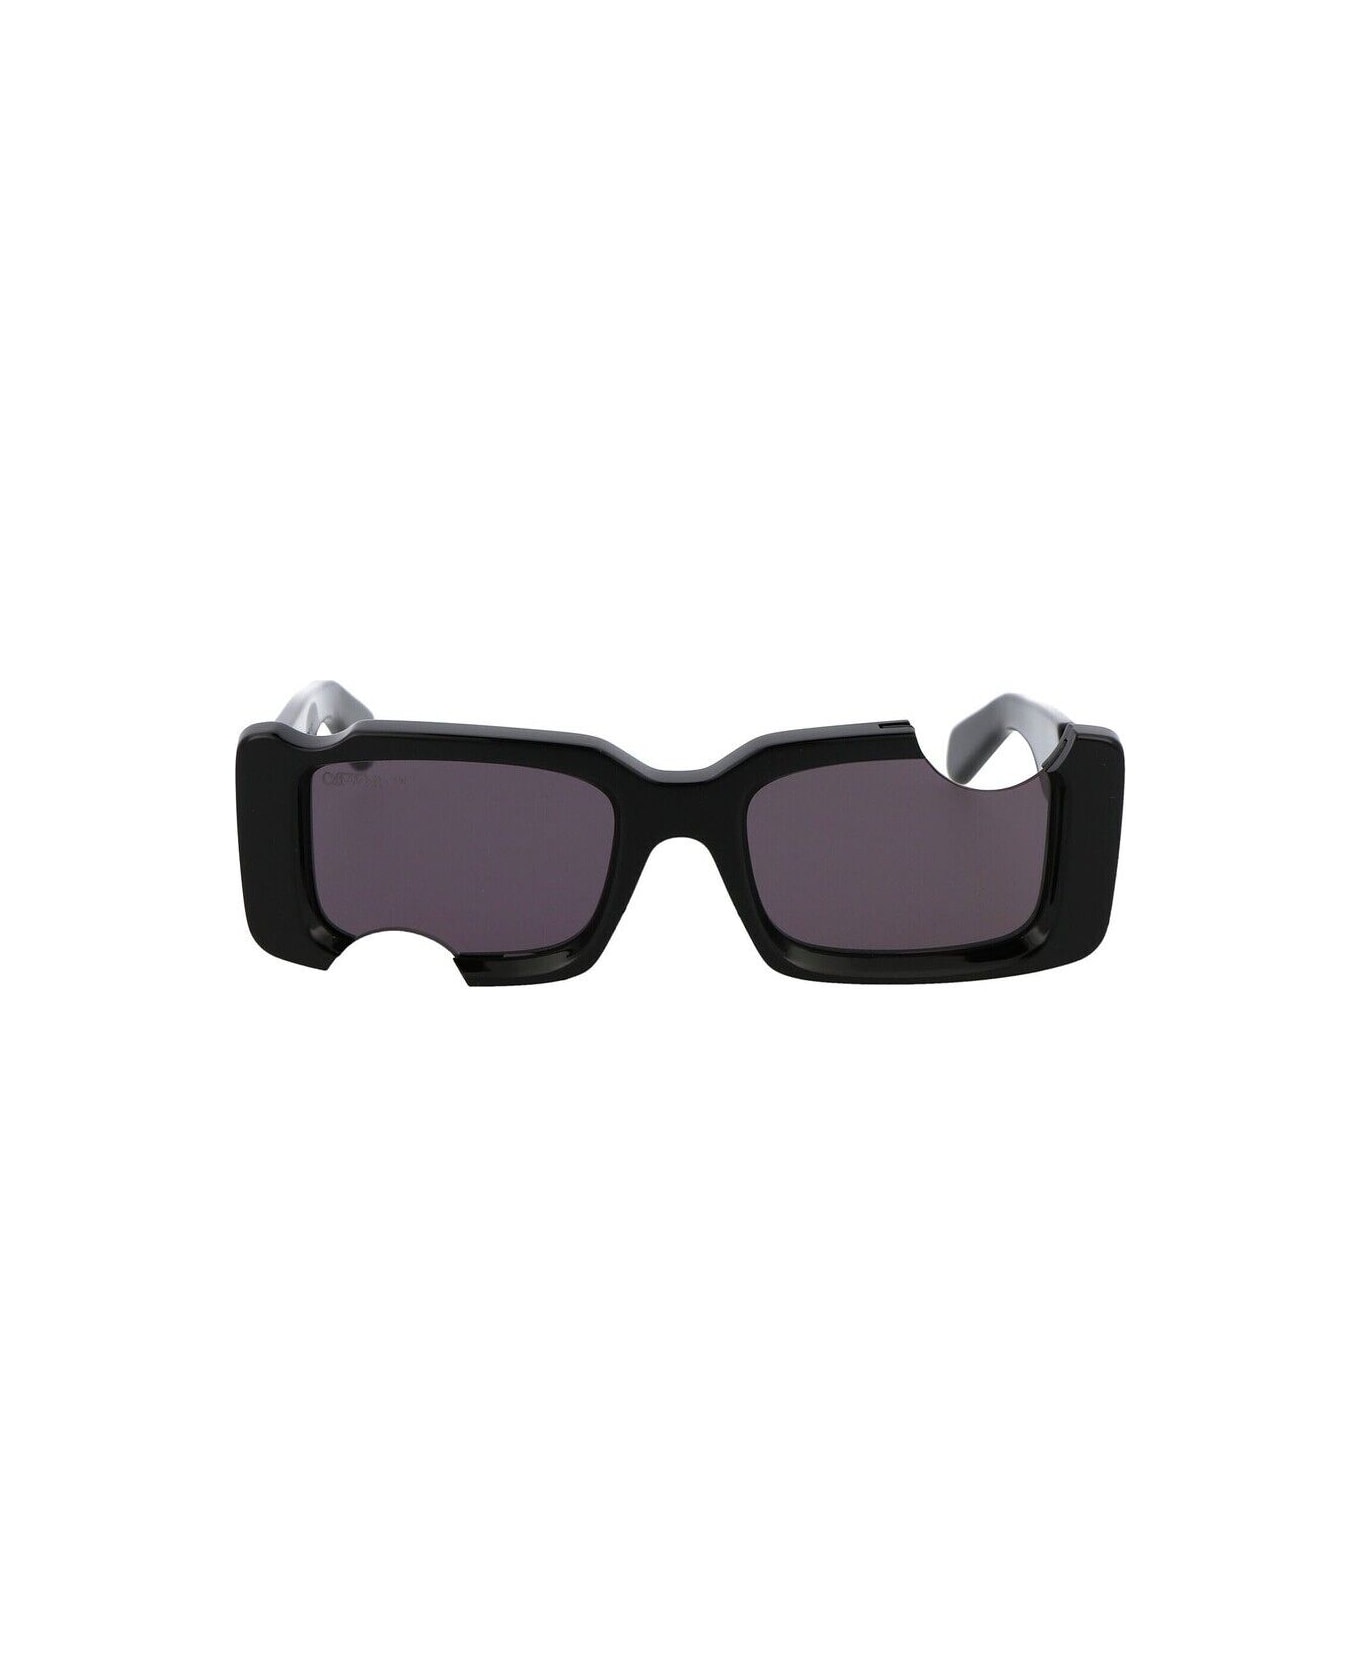 Off-White Cady Sunglasses - Black